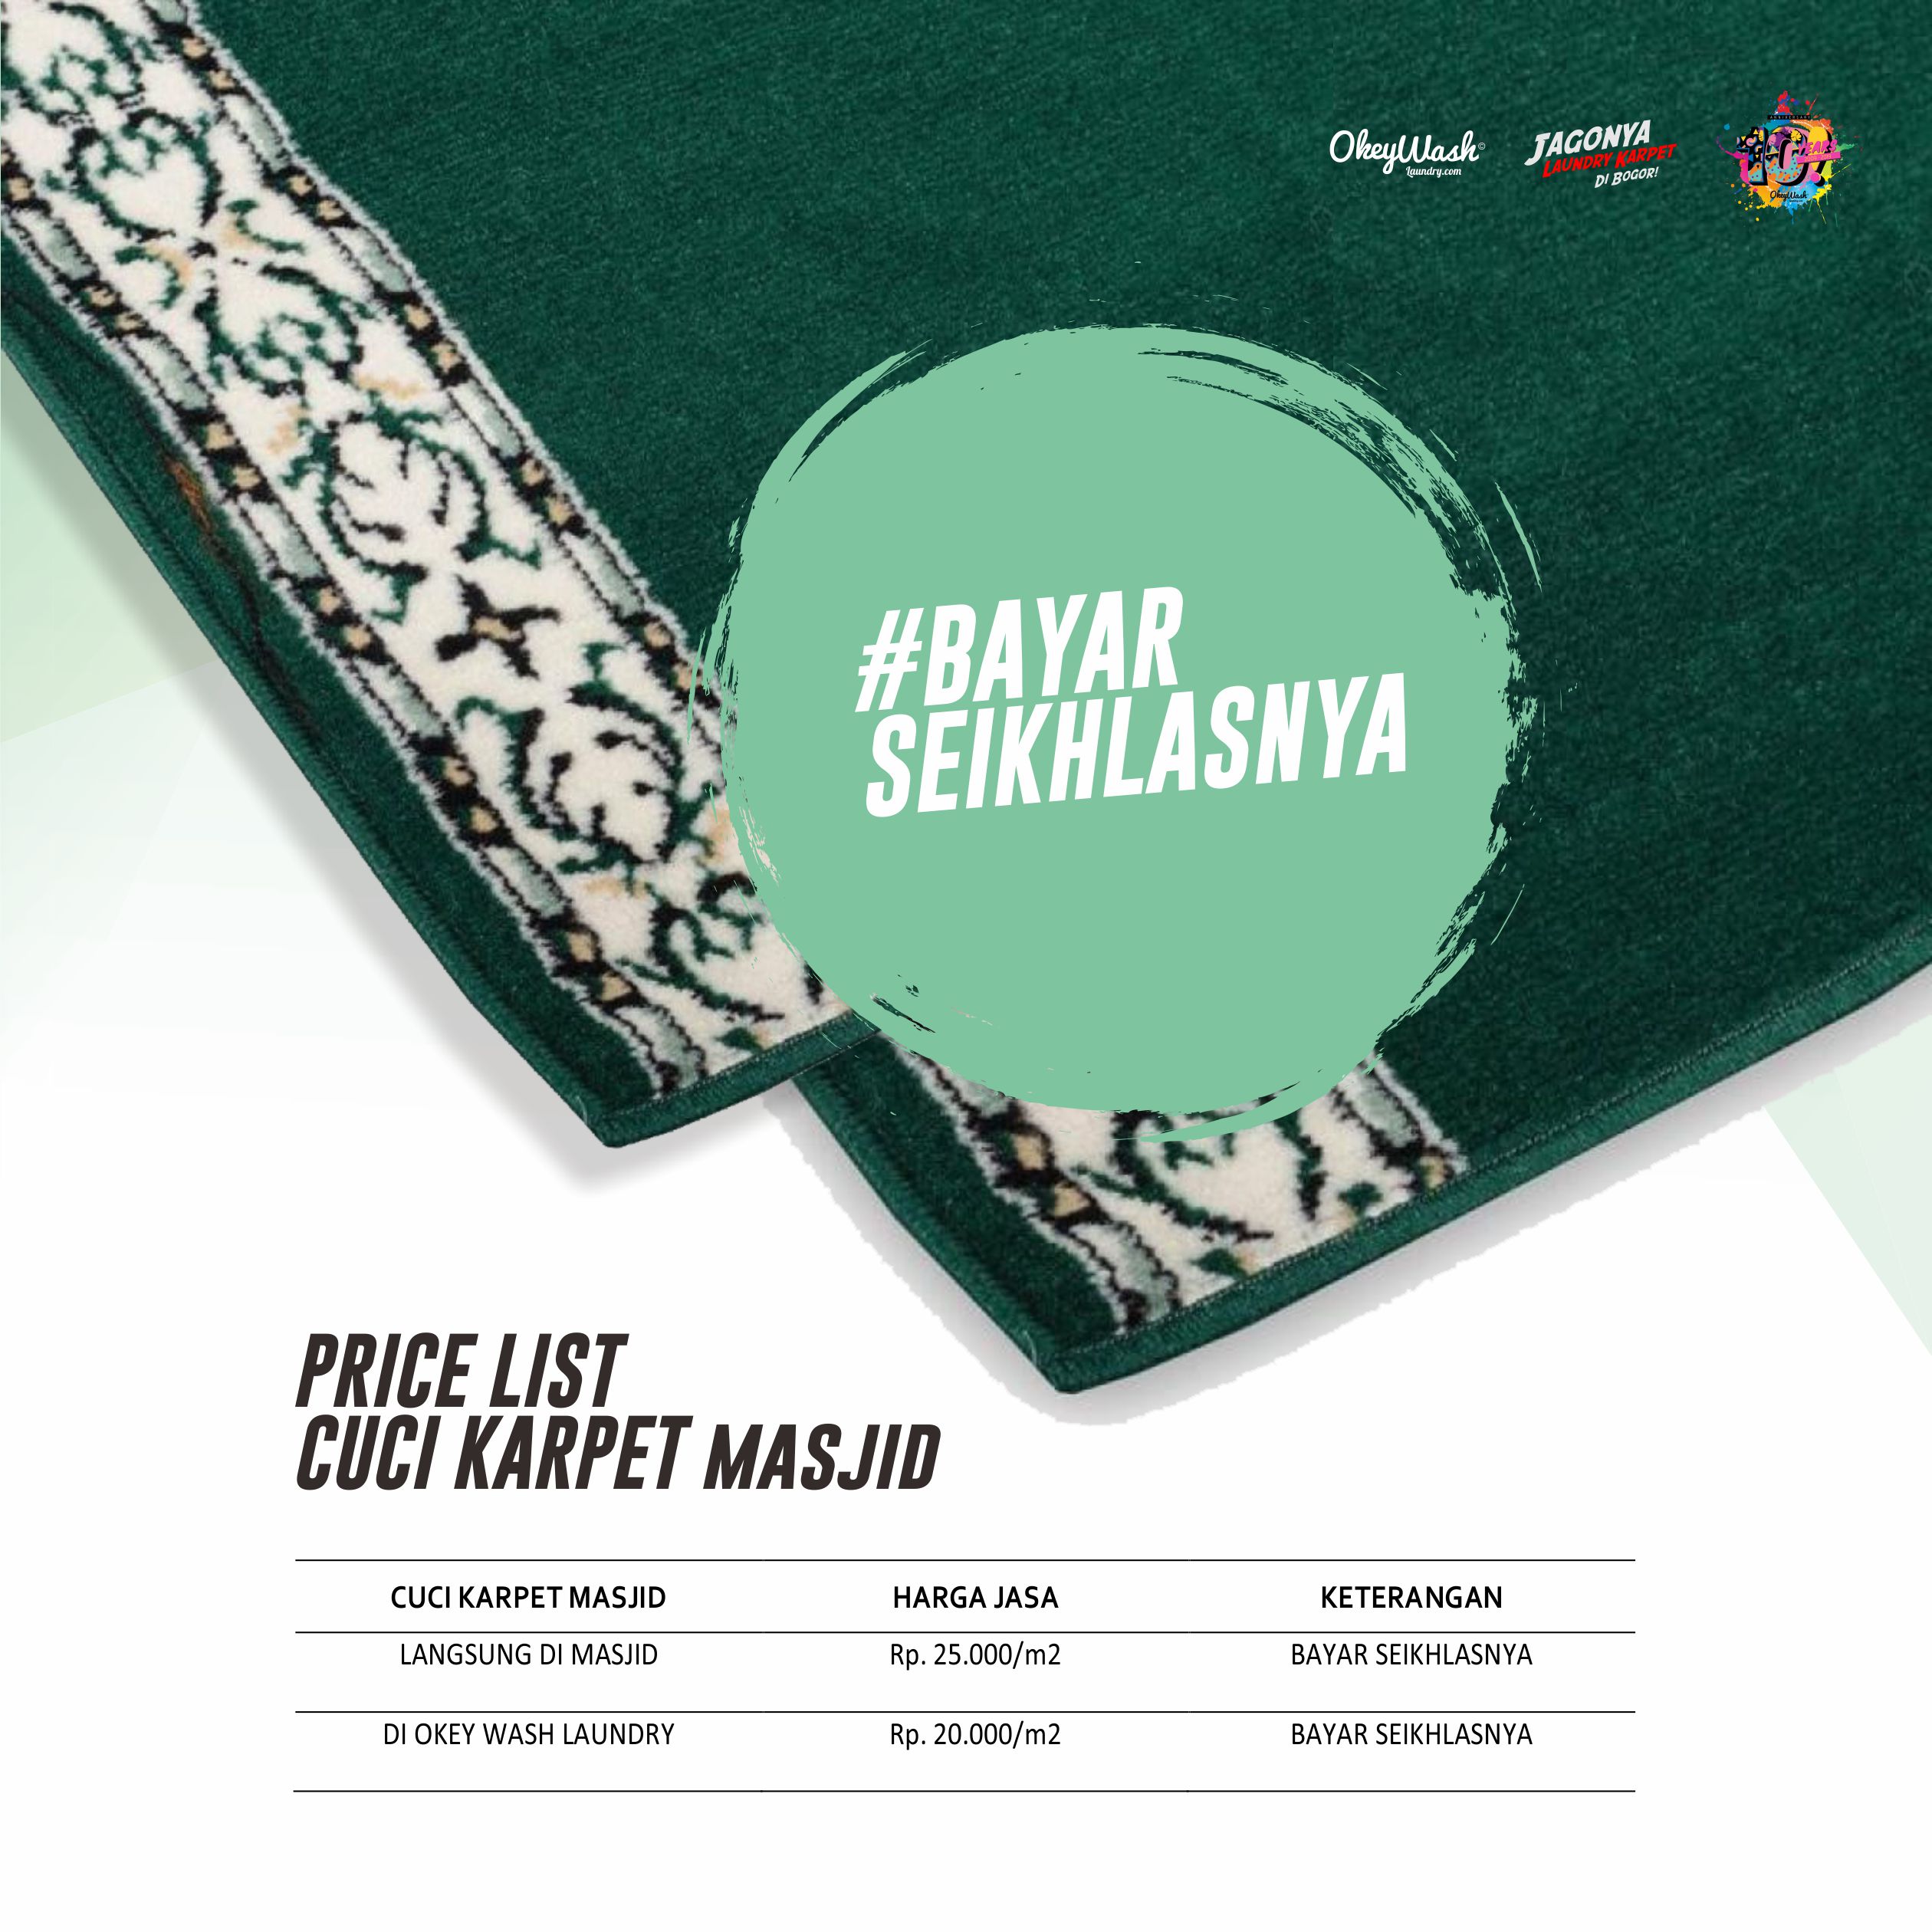 Price List Okey Wash Laundry 2019 - Cuci Karpet Masjid